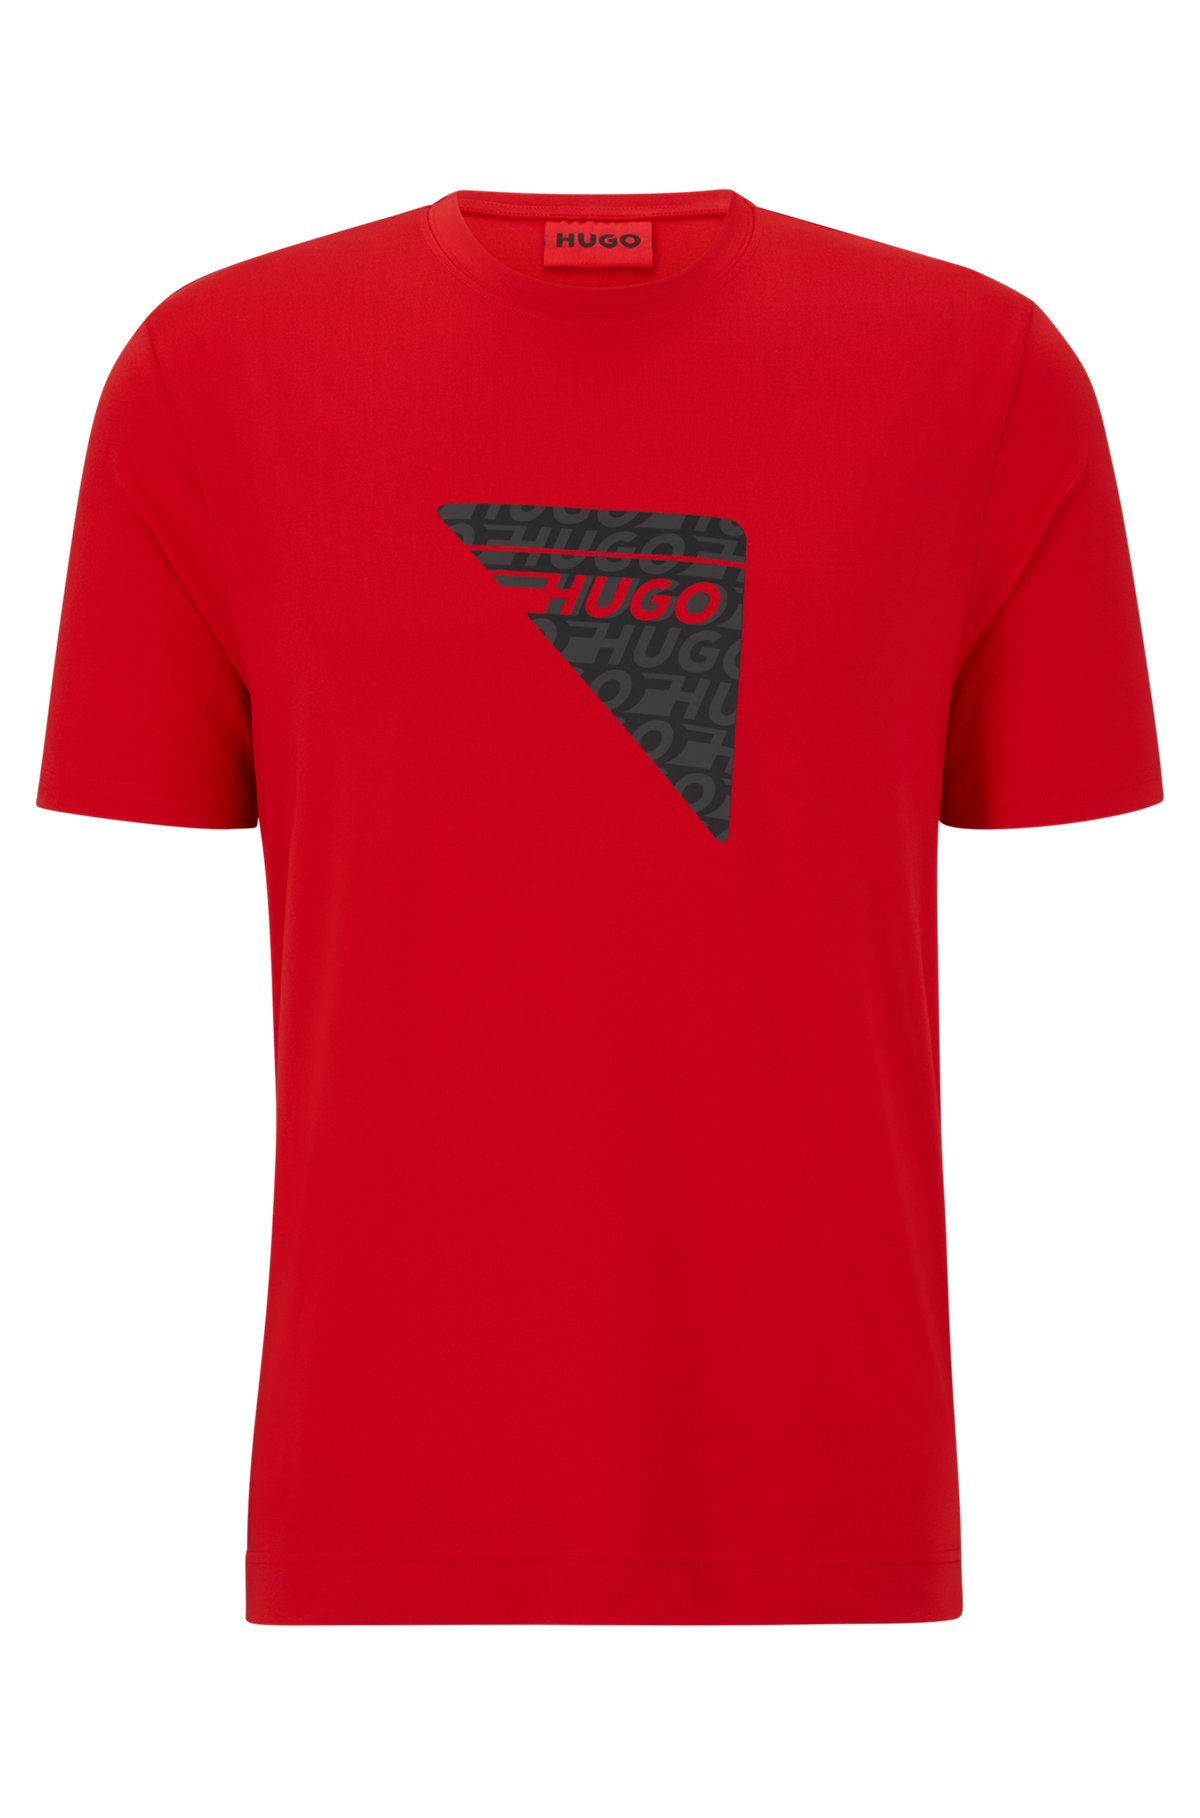 HUGO - Capsule-logo T-shirt in stretch-mesh fabric